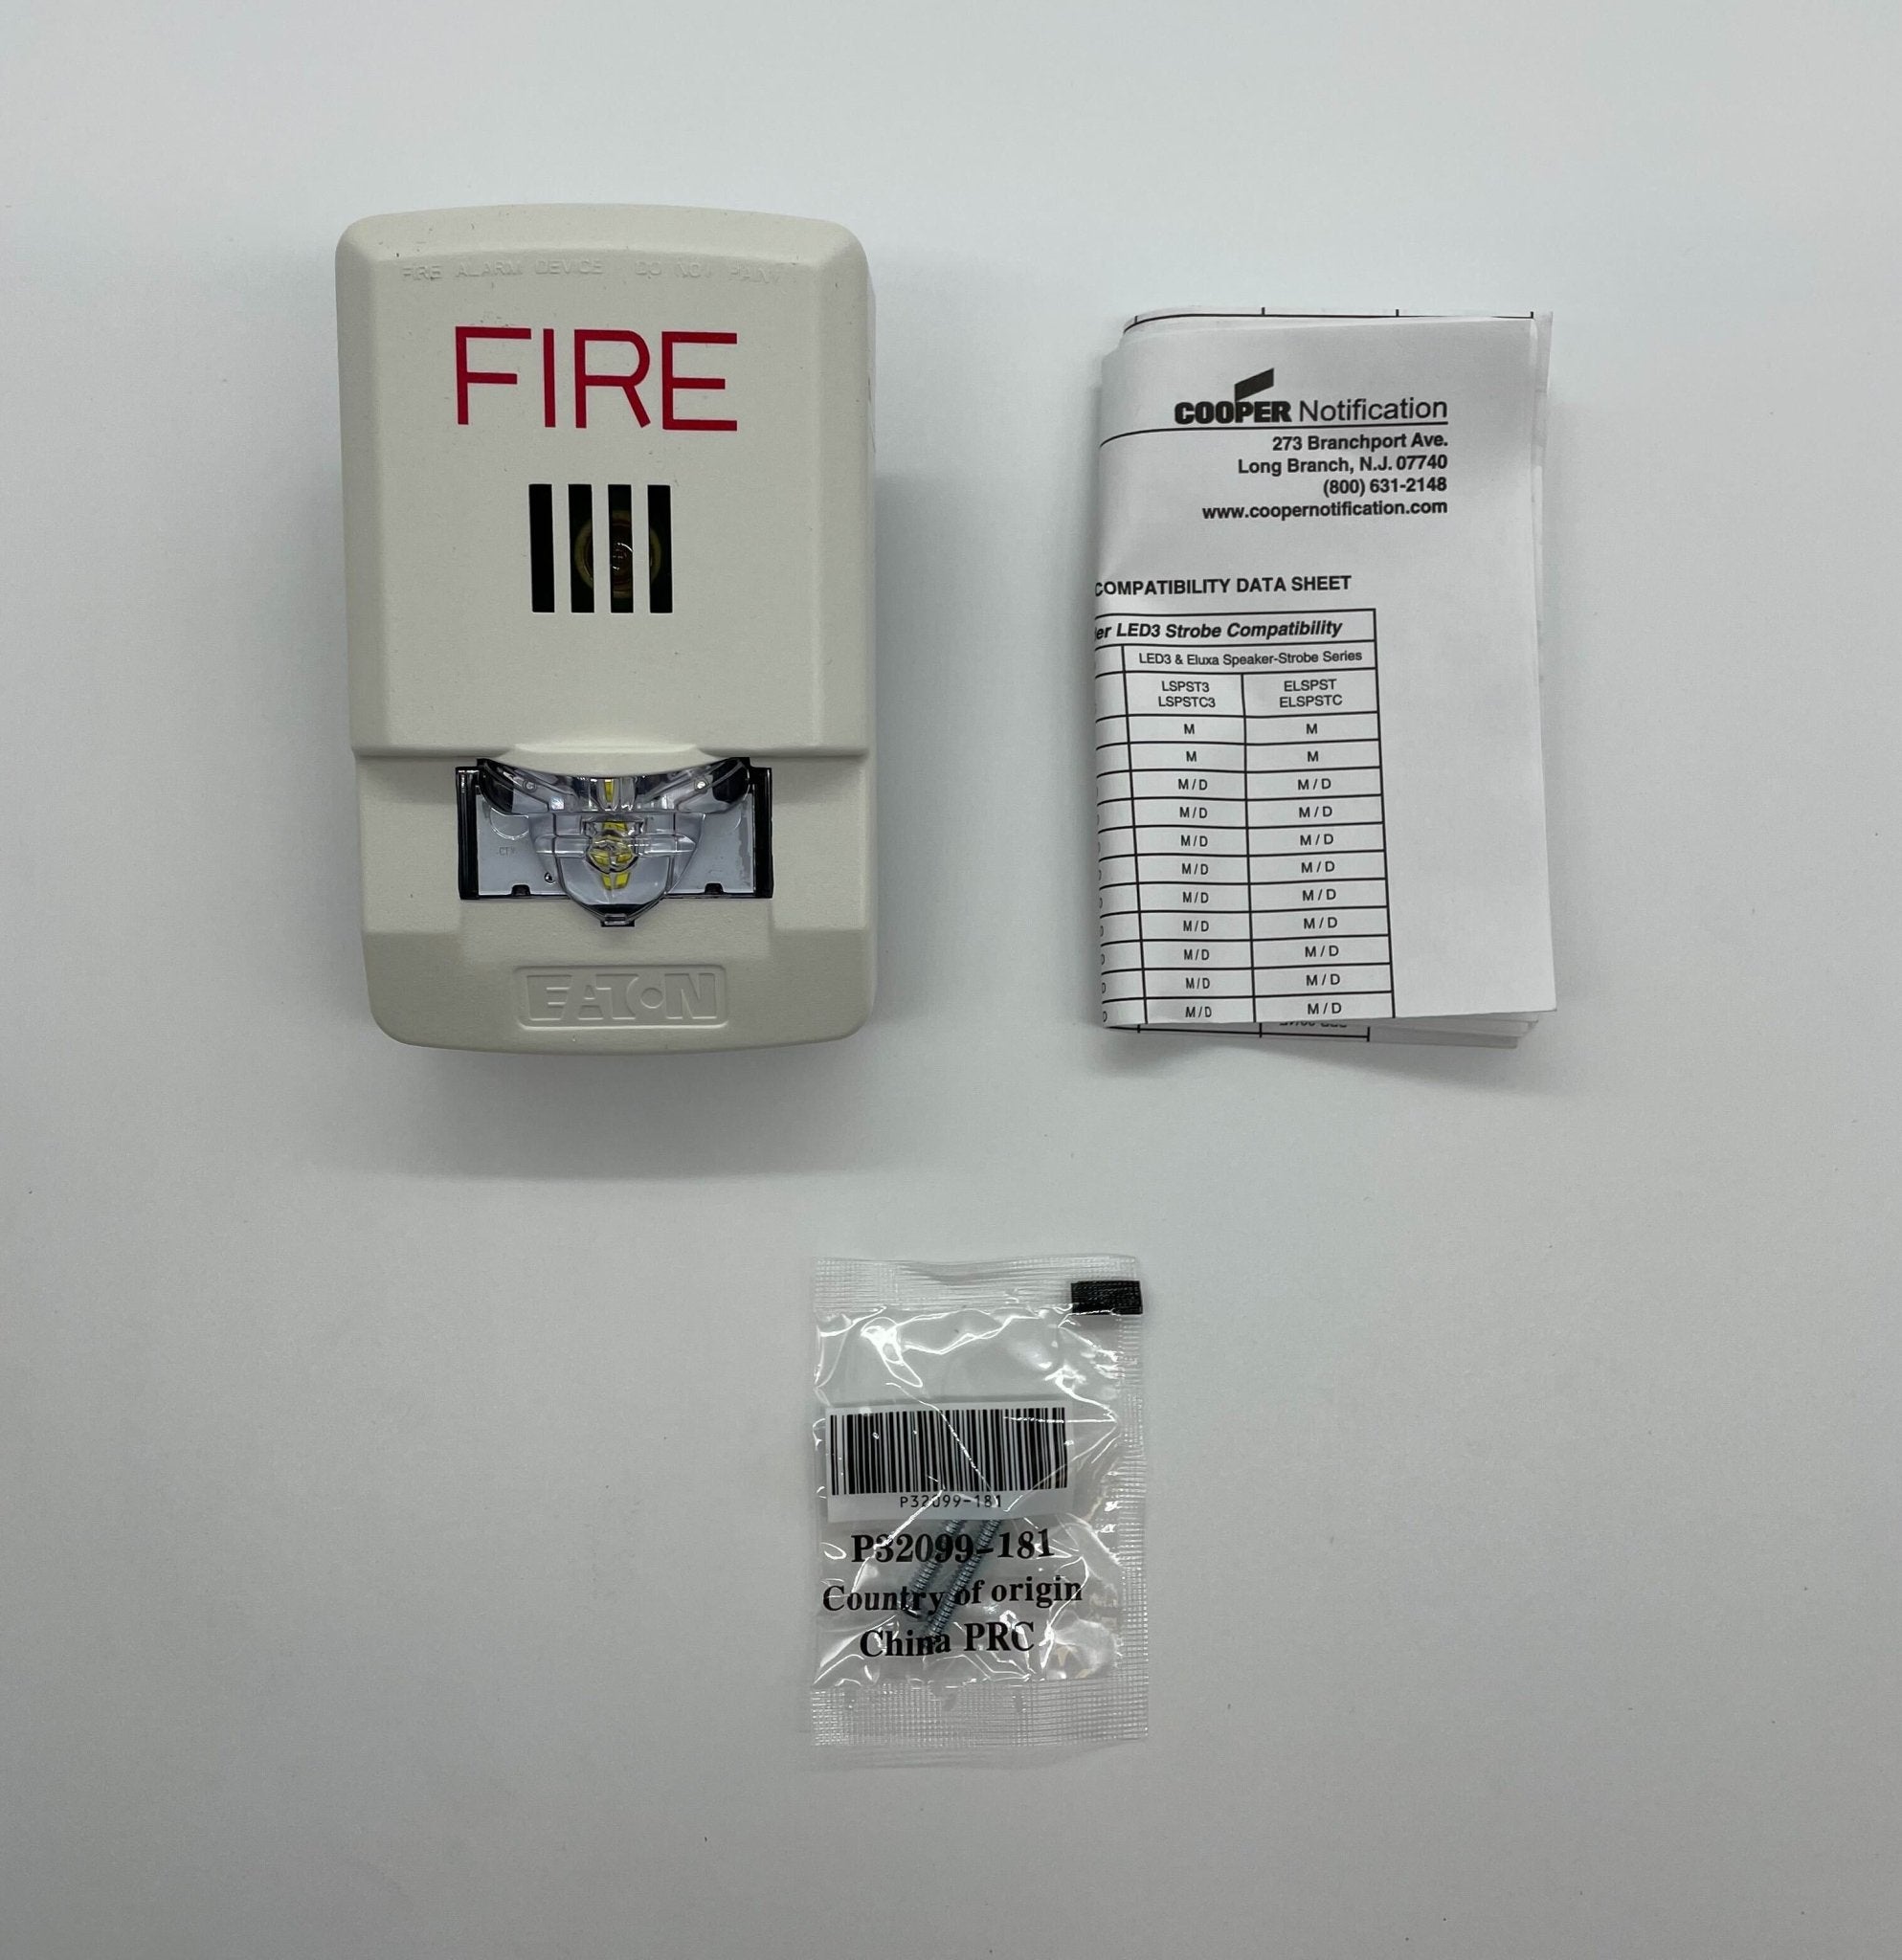 Wheelock LHSW3 - The Fire Alarm Supplier